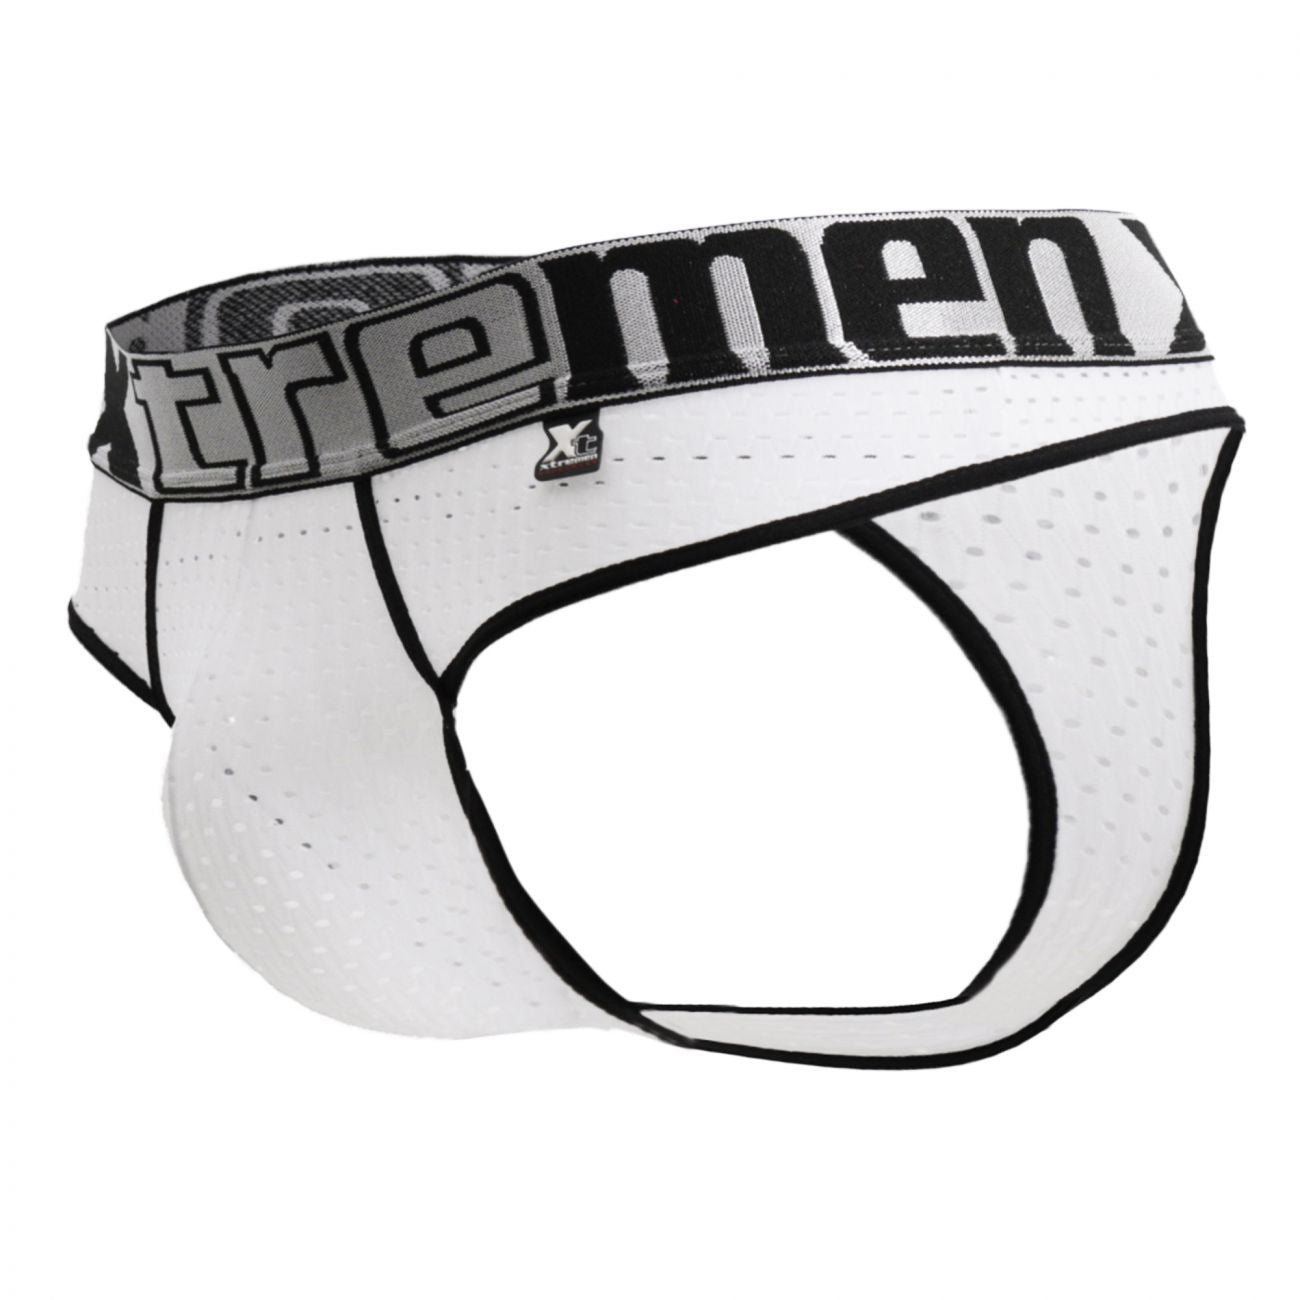 Xtremen 91036-3 3PK Thongs White-Gray-Blue Plus Sizes